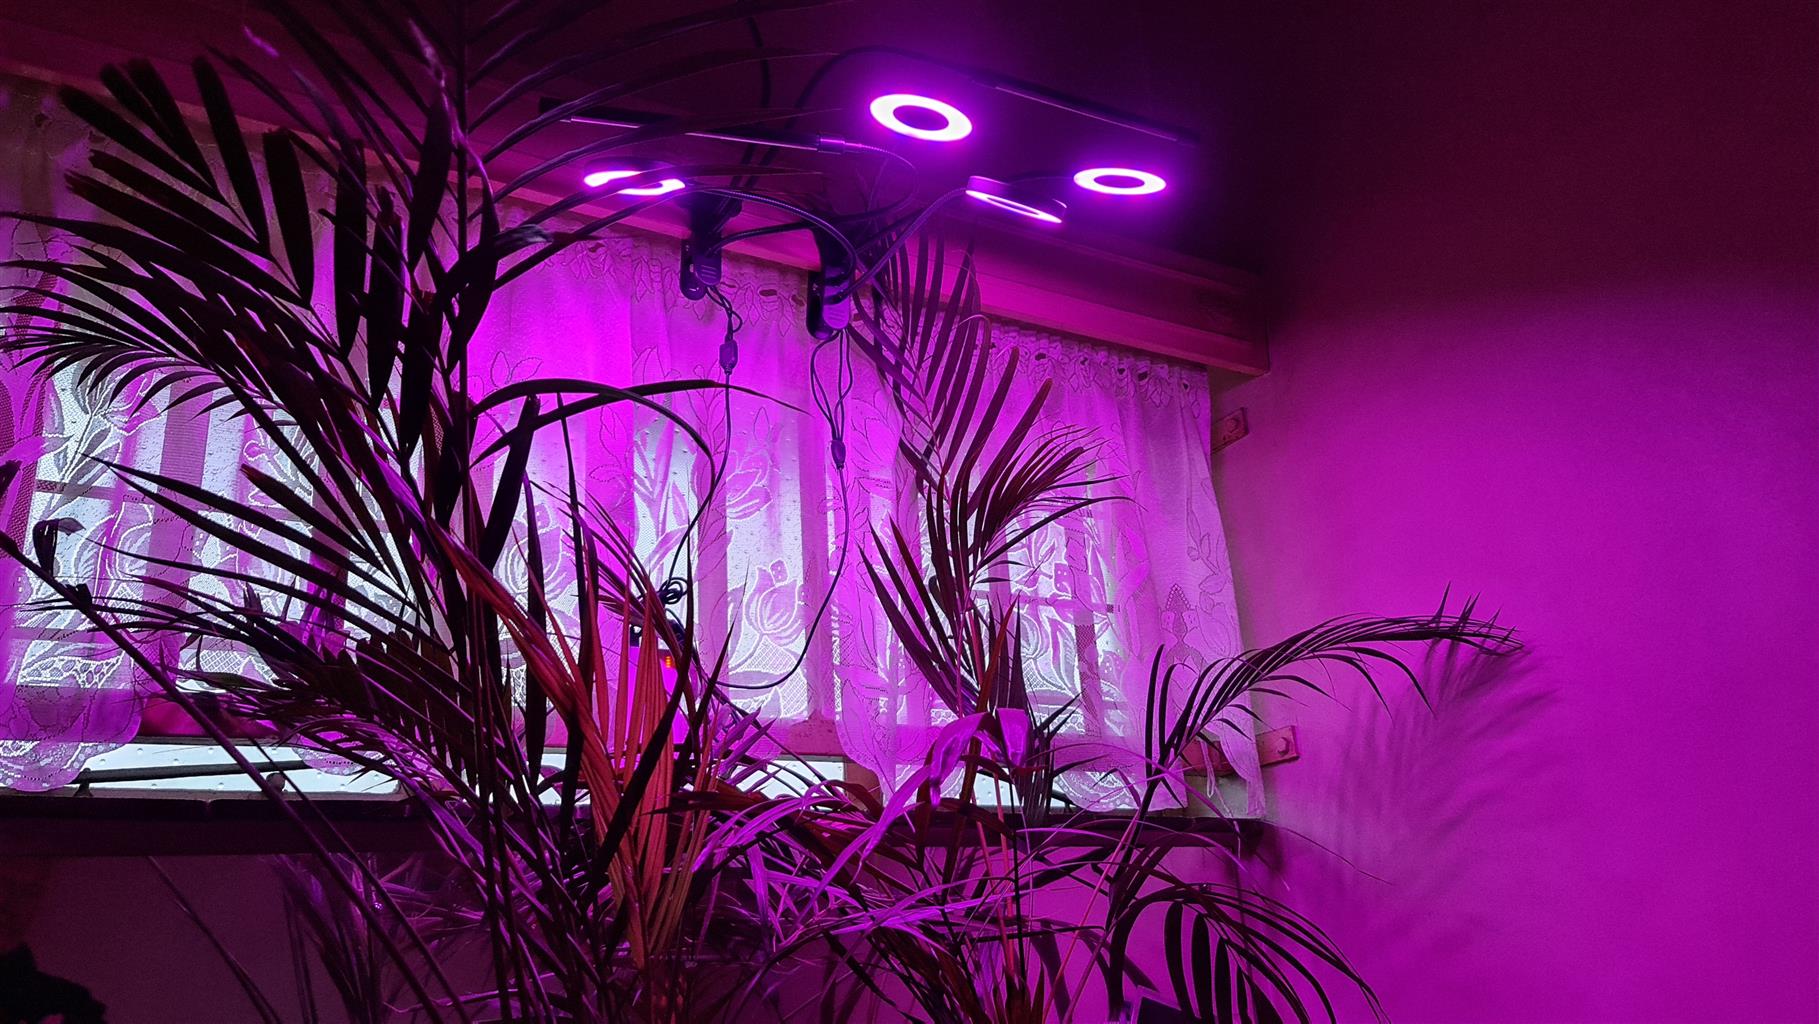 Alien Plant Growing LED Lights New